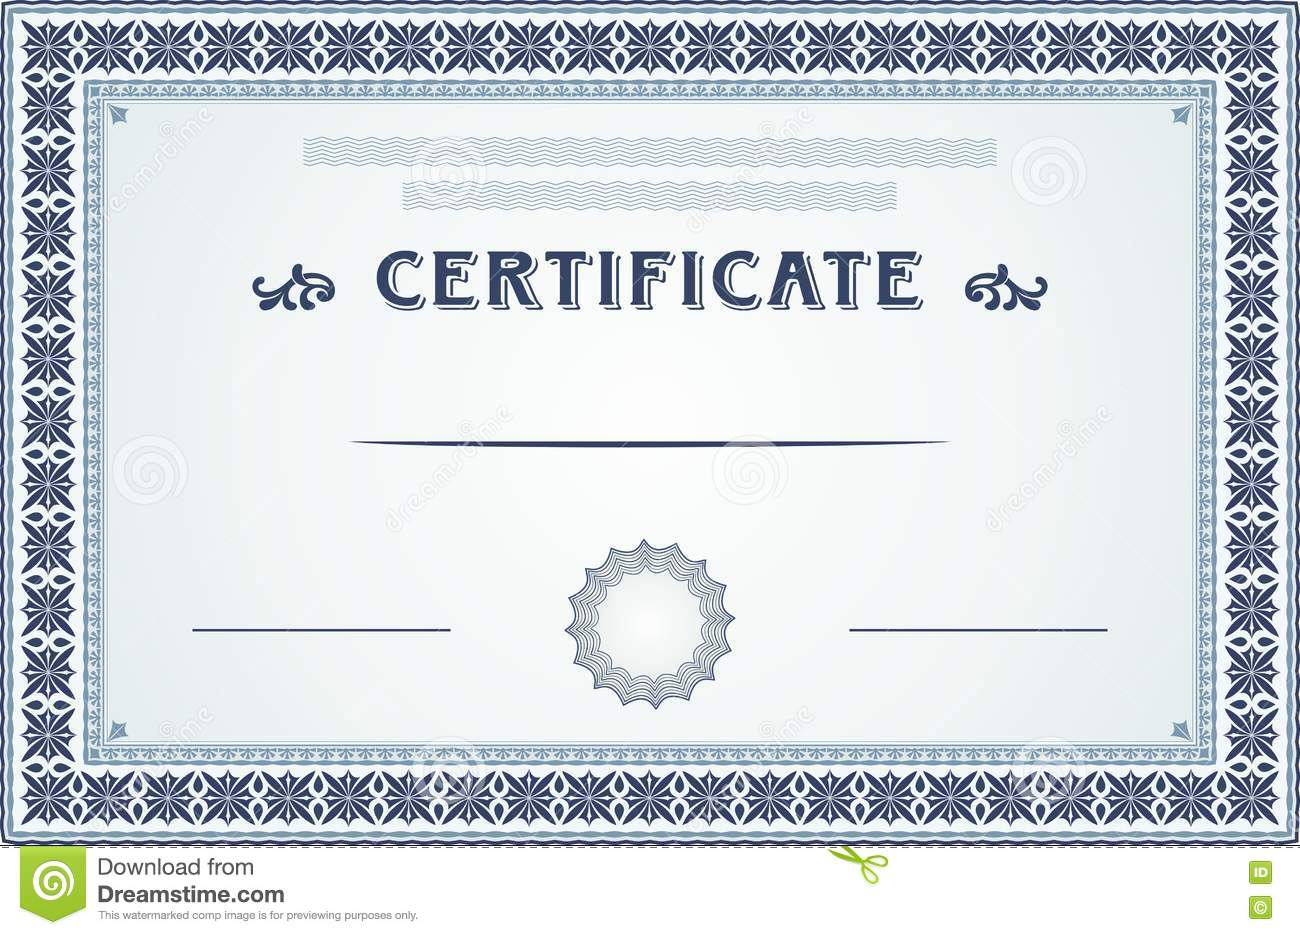 Certificate Border And Template Design Stock Vector – Illustration  Intended For Certificate Border Design Templates